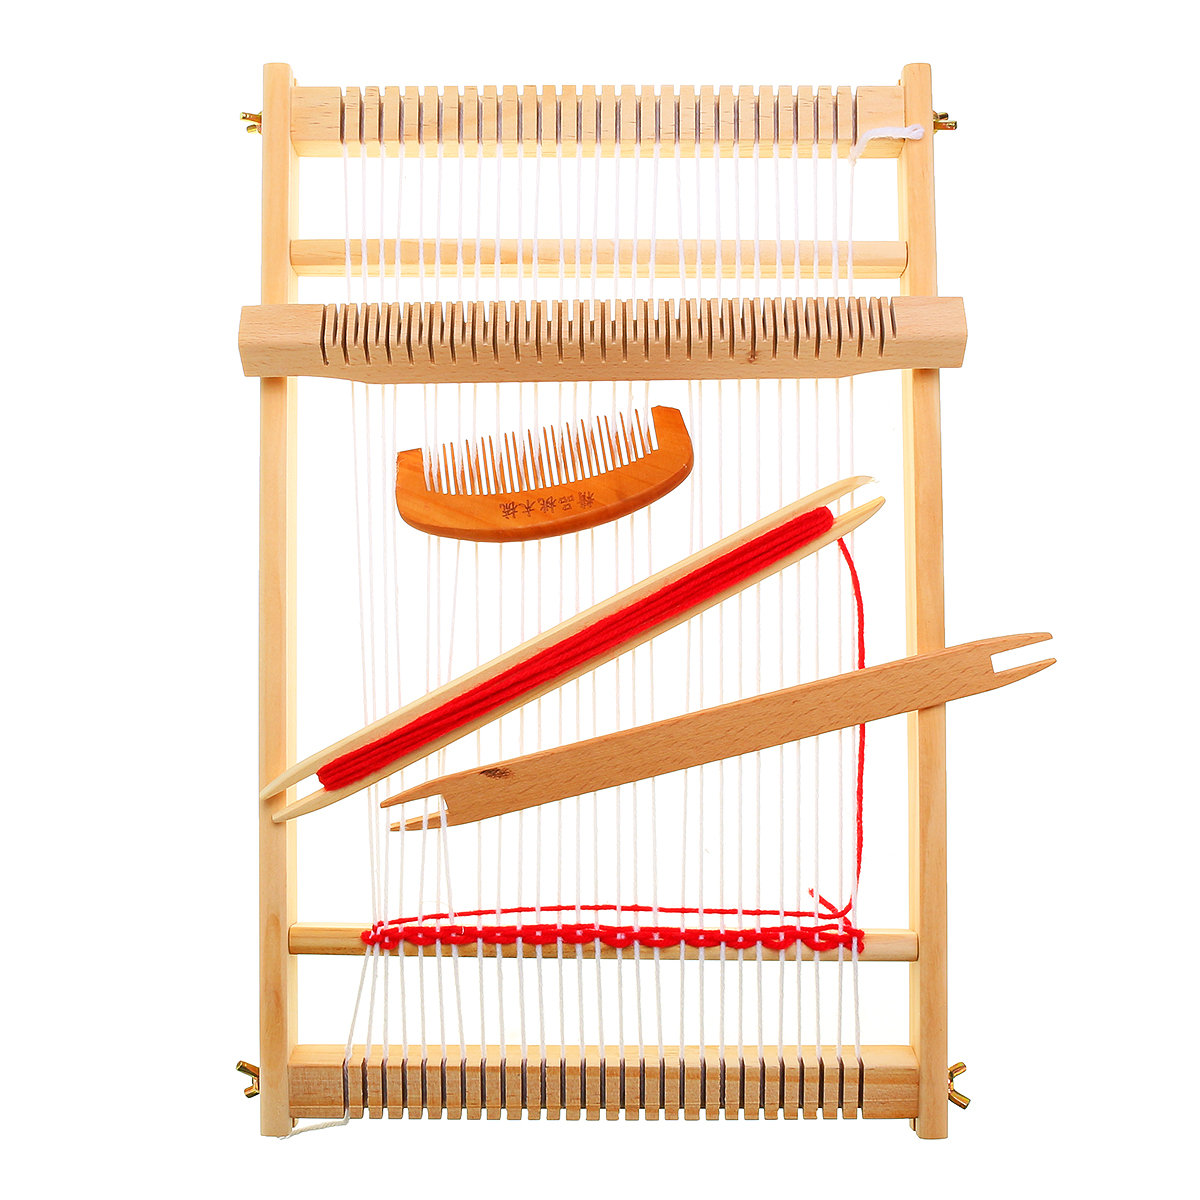 

DIY Traditional Wooden Weaving Loom Machine Suitable for Weaving Beginner Kids Knitting Craft